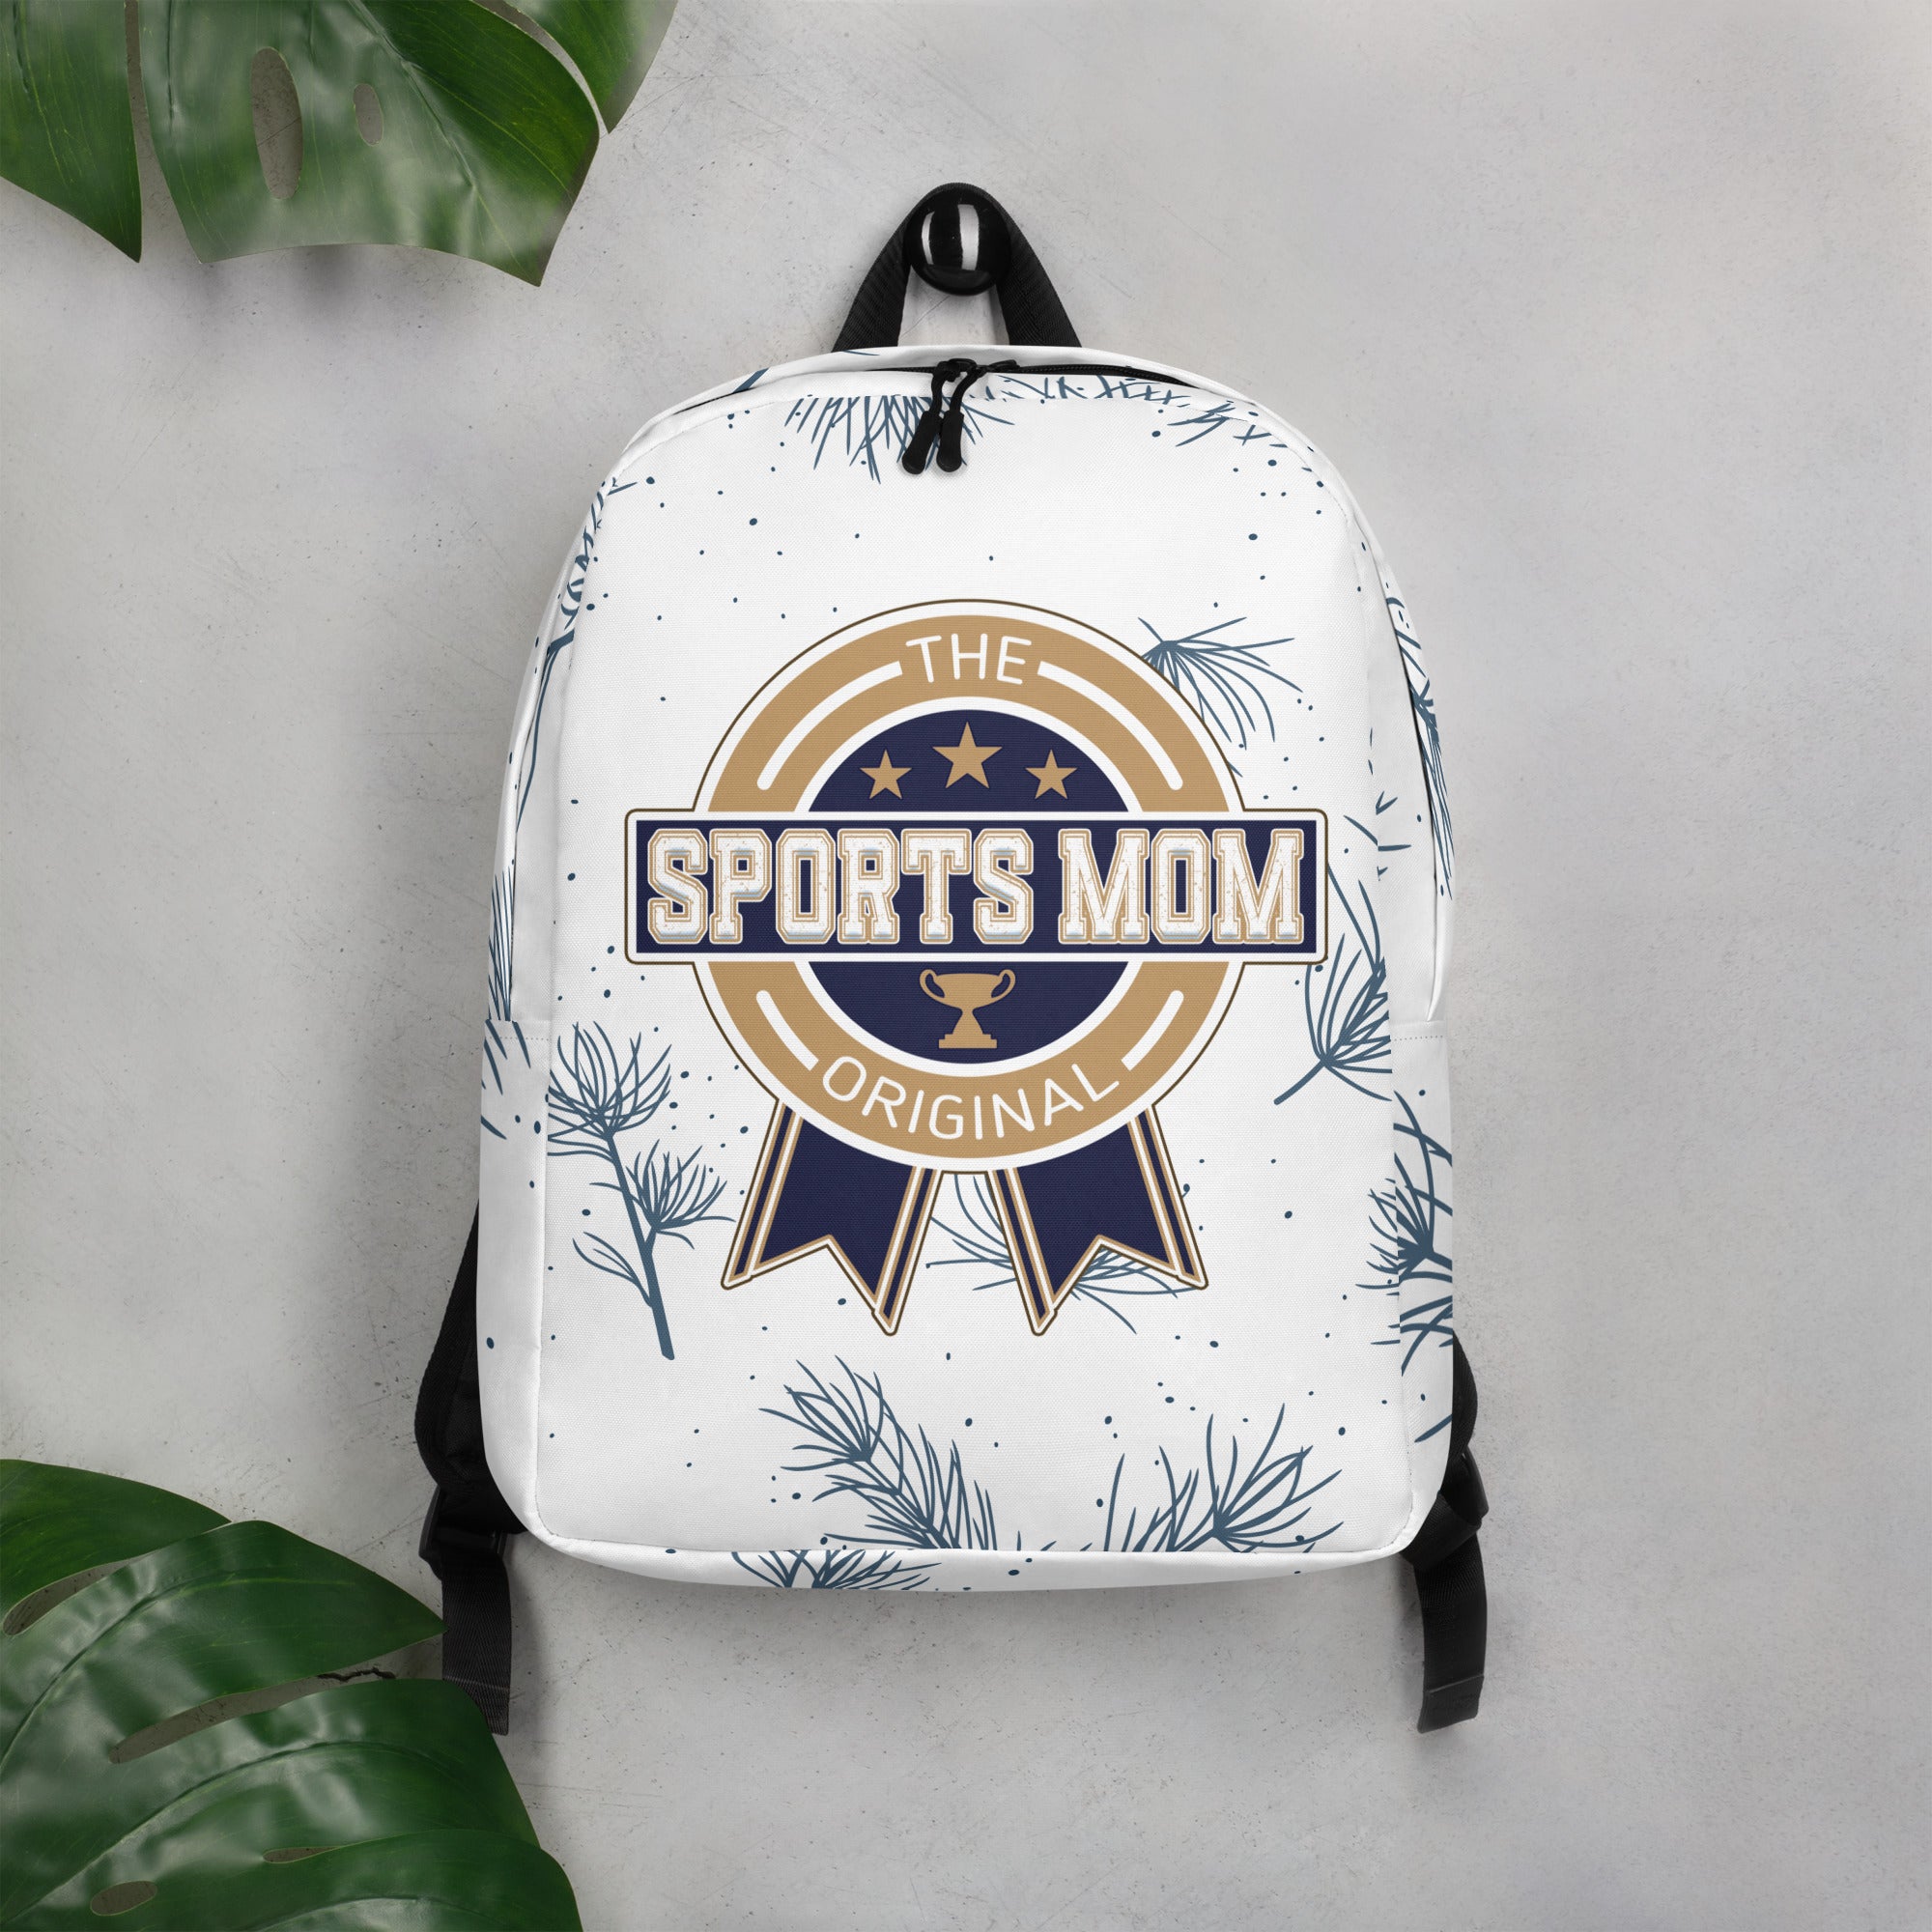 Sports Mom Minimalist Backpack - Away Game - Pine Needles